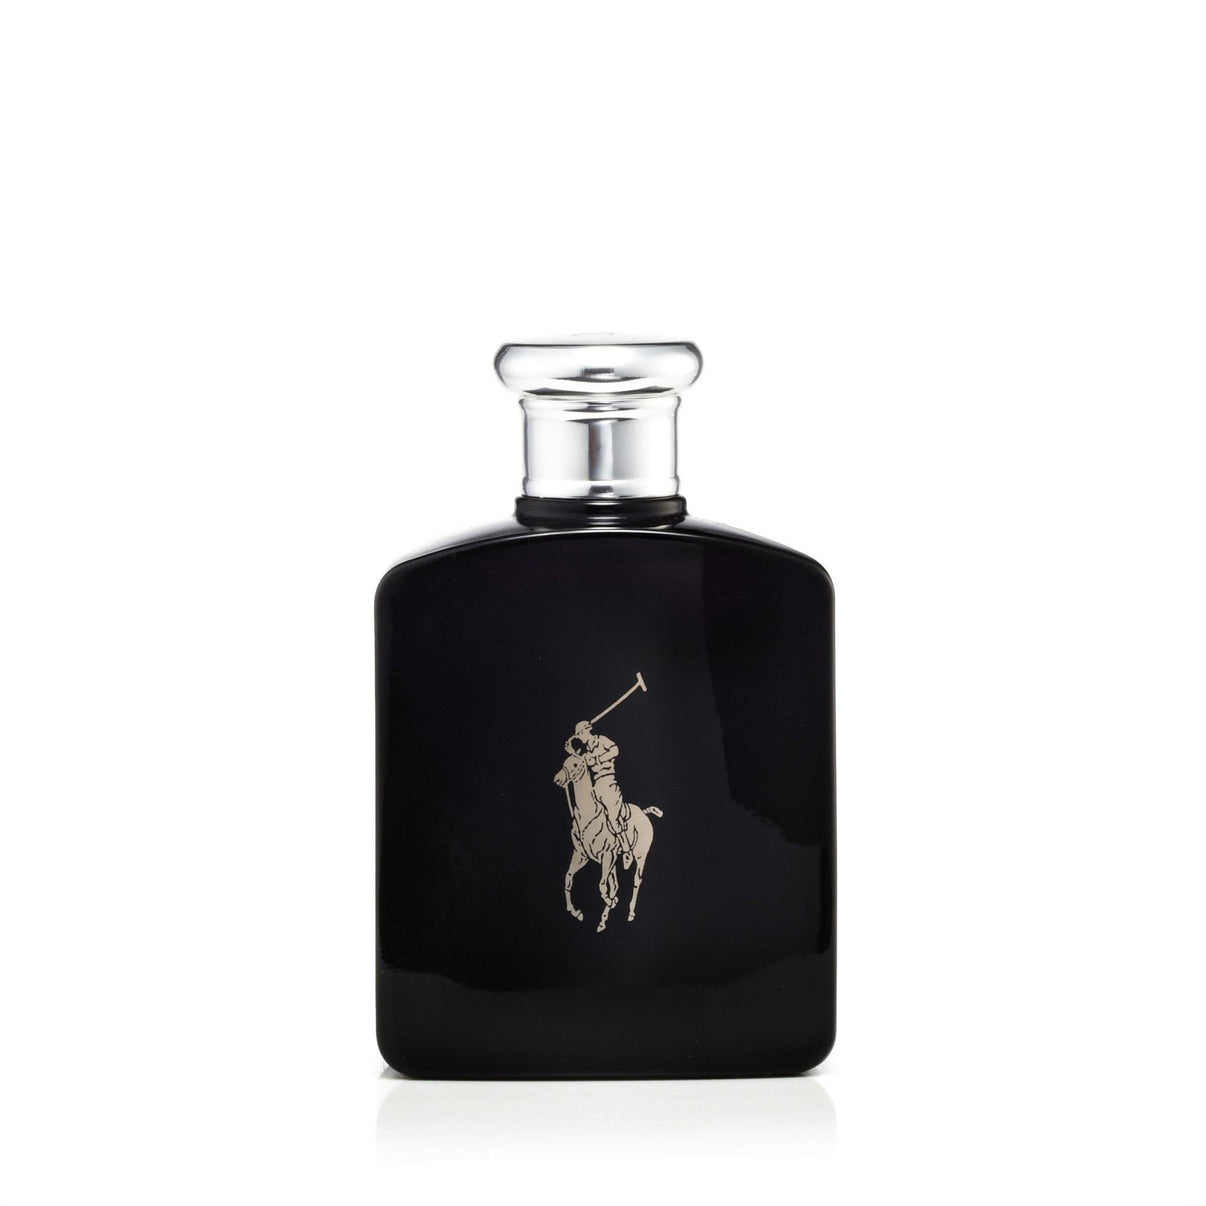 Polo Black EDT for Men by Ralph Lauren – Fragrance Outlet